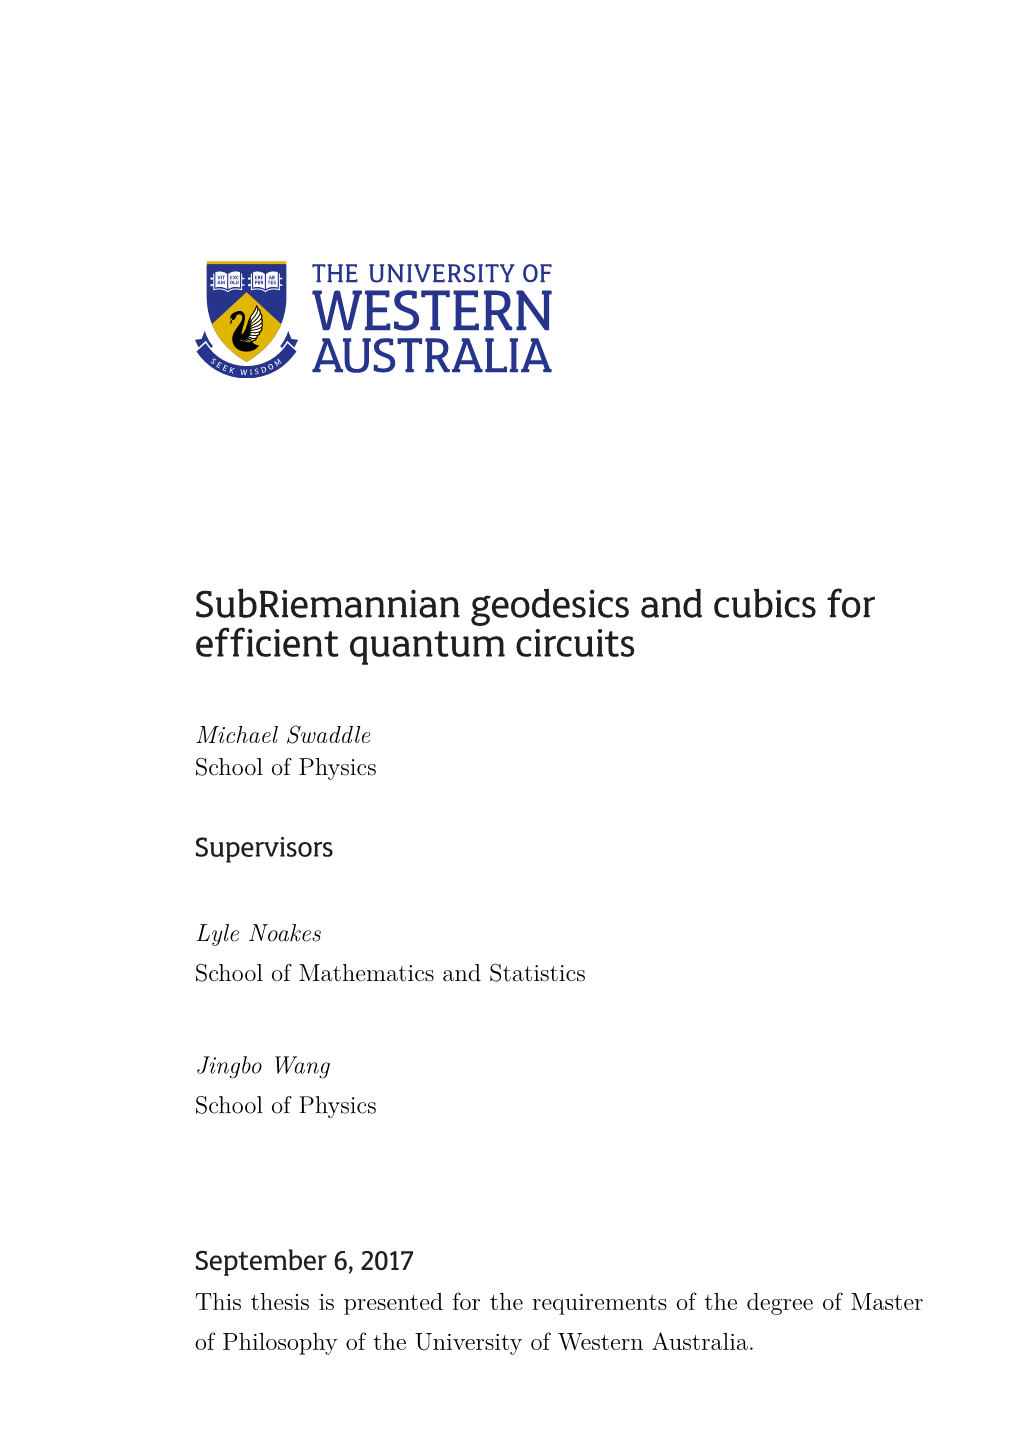 Subriemannian Geodesics and Cubics for Efficient Quantum Circuits